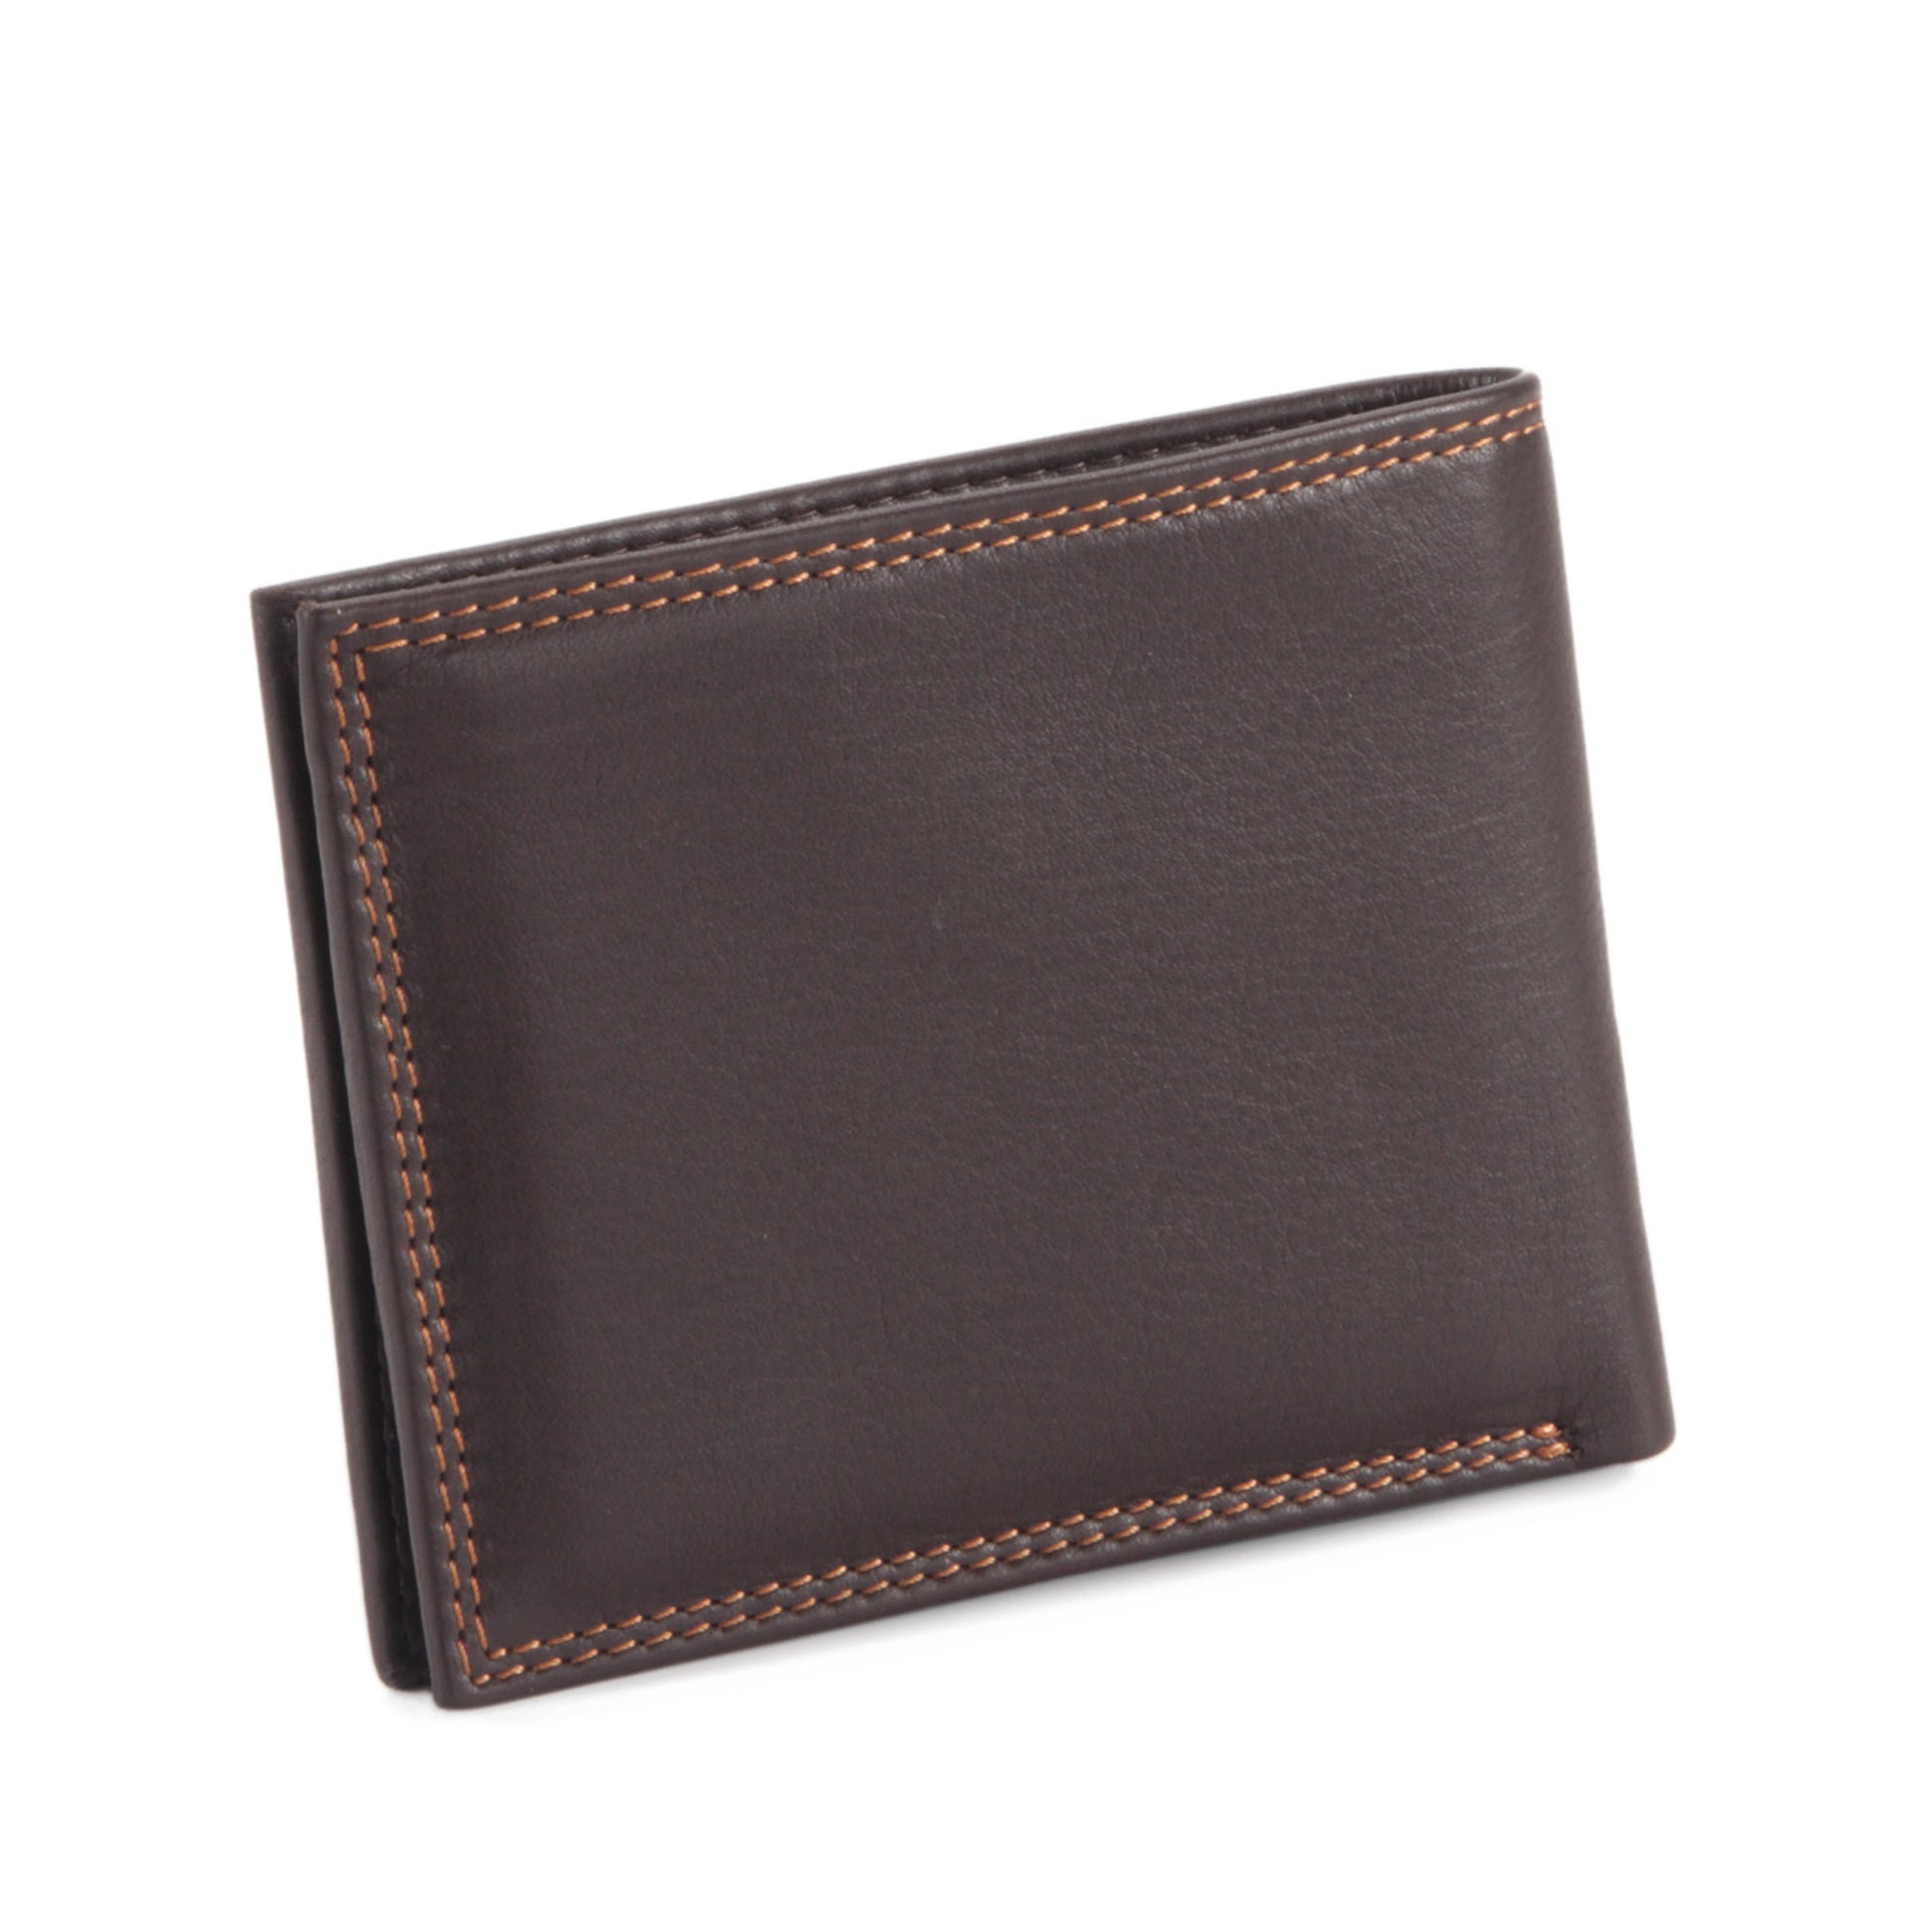 Style n Craft 300720-BR Slim bi-fold wallet in brown top grain leather - closed back view